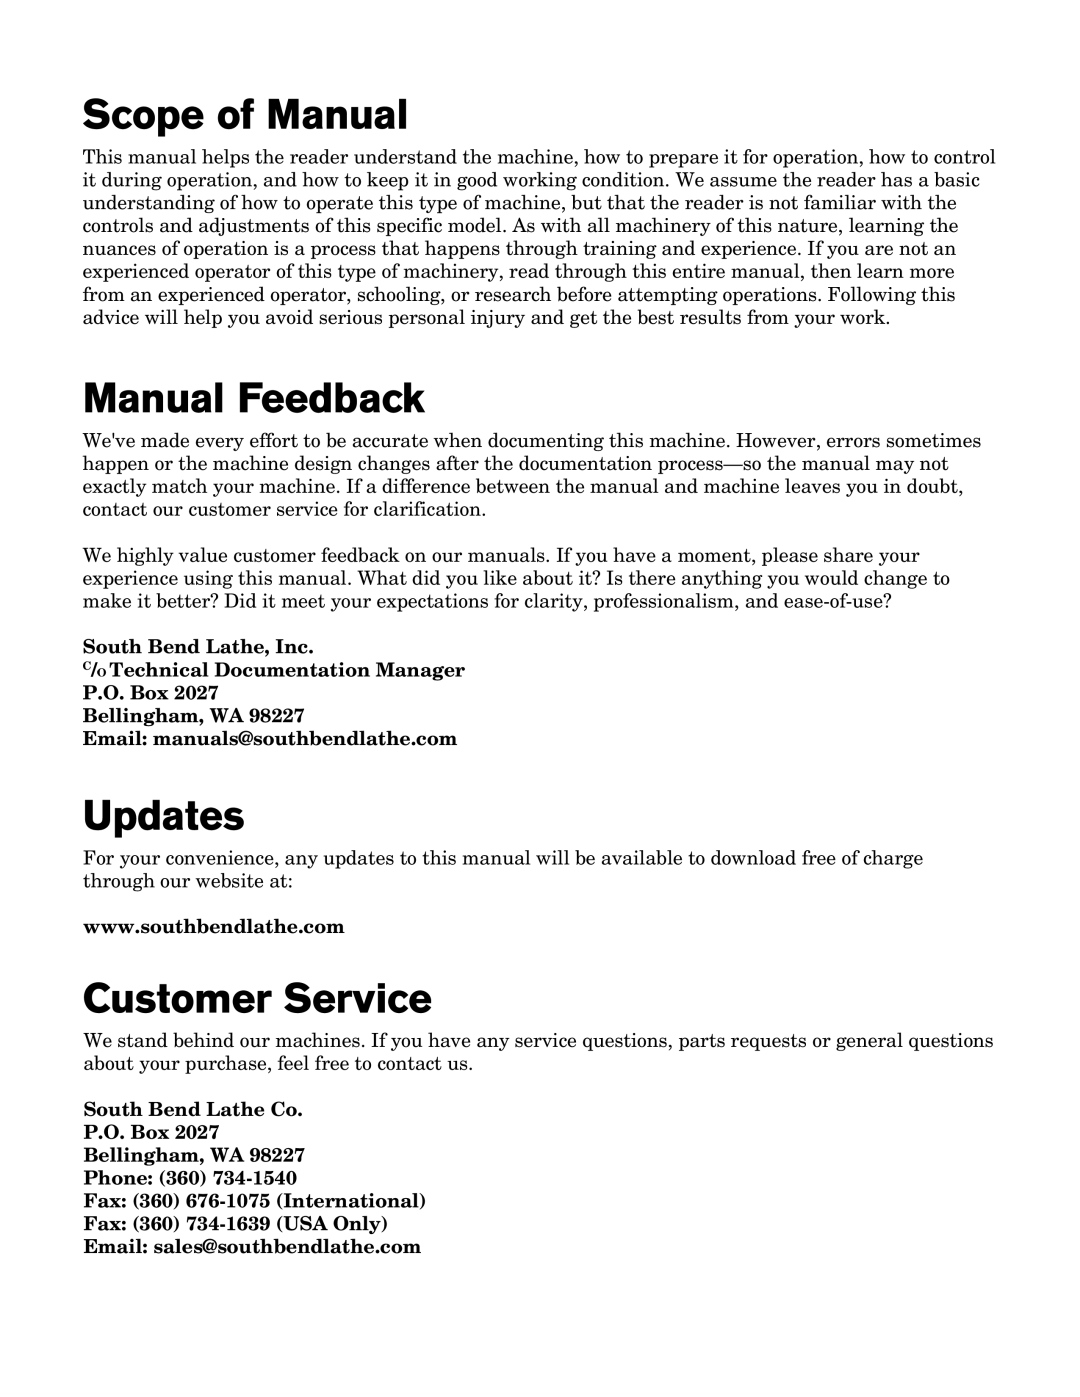 Southbend SB Scope of Manual, Manual Feedback, Updates, Customer Service, Bellingham, WA Email manuals@southbendlathe.com 